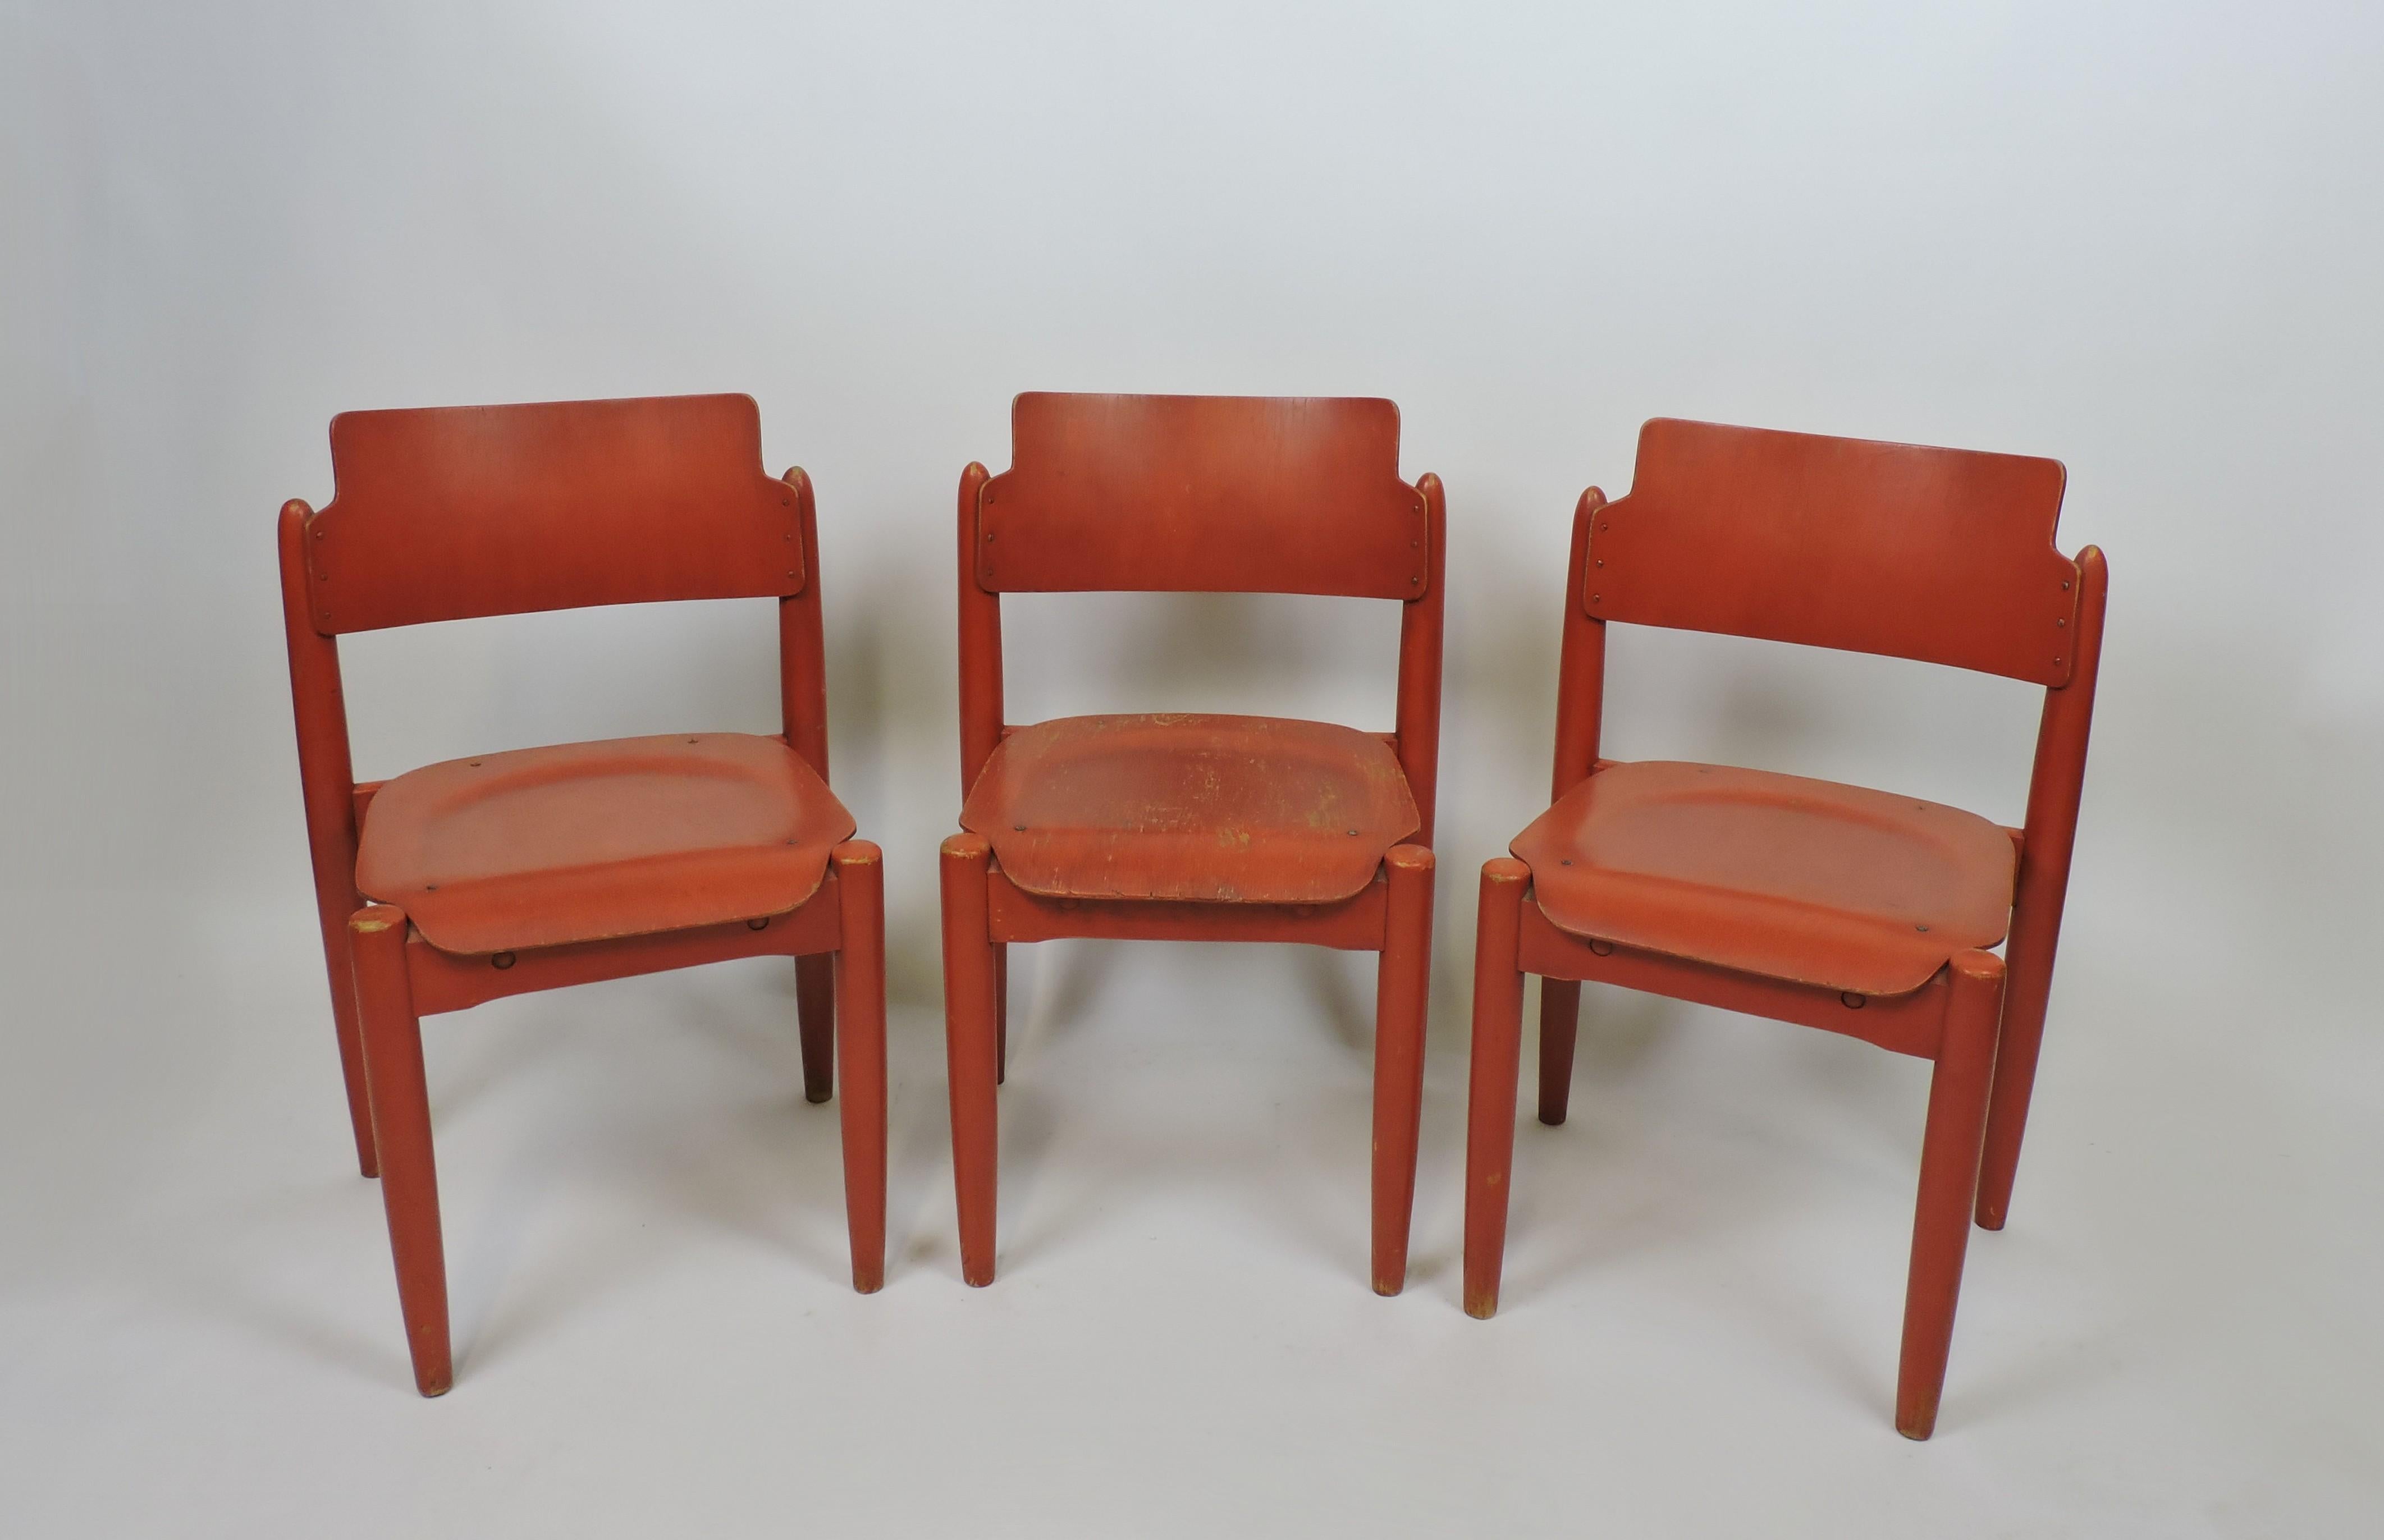  Ilmari Tapiovaara ensemble de 3 chaises Wilman empilables rares scandinaves modernes en vente 8